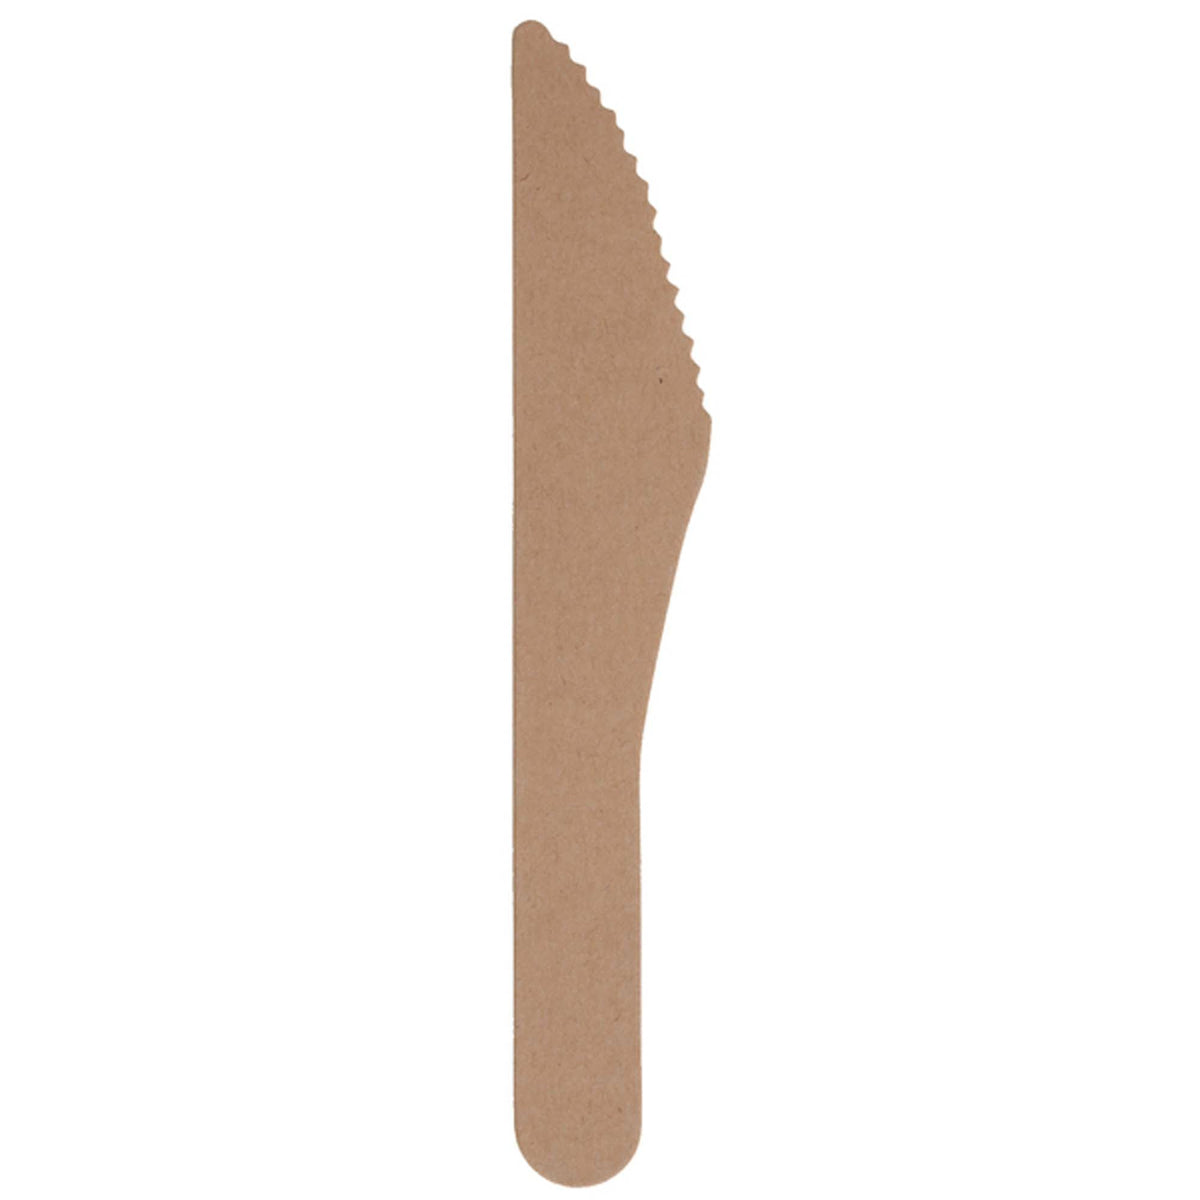 SANTEX Disposable-Plasticware Kraft ECO Paper Knives, 10 Count 3660380097877